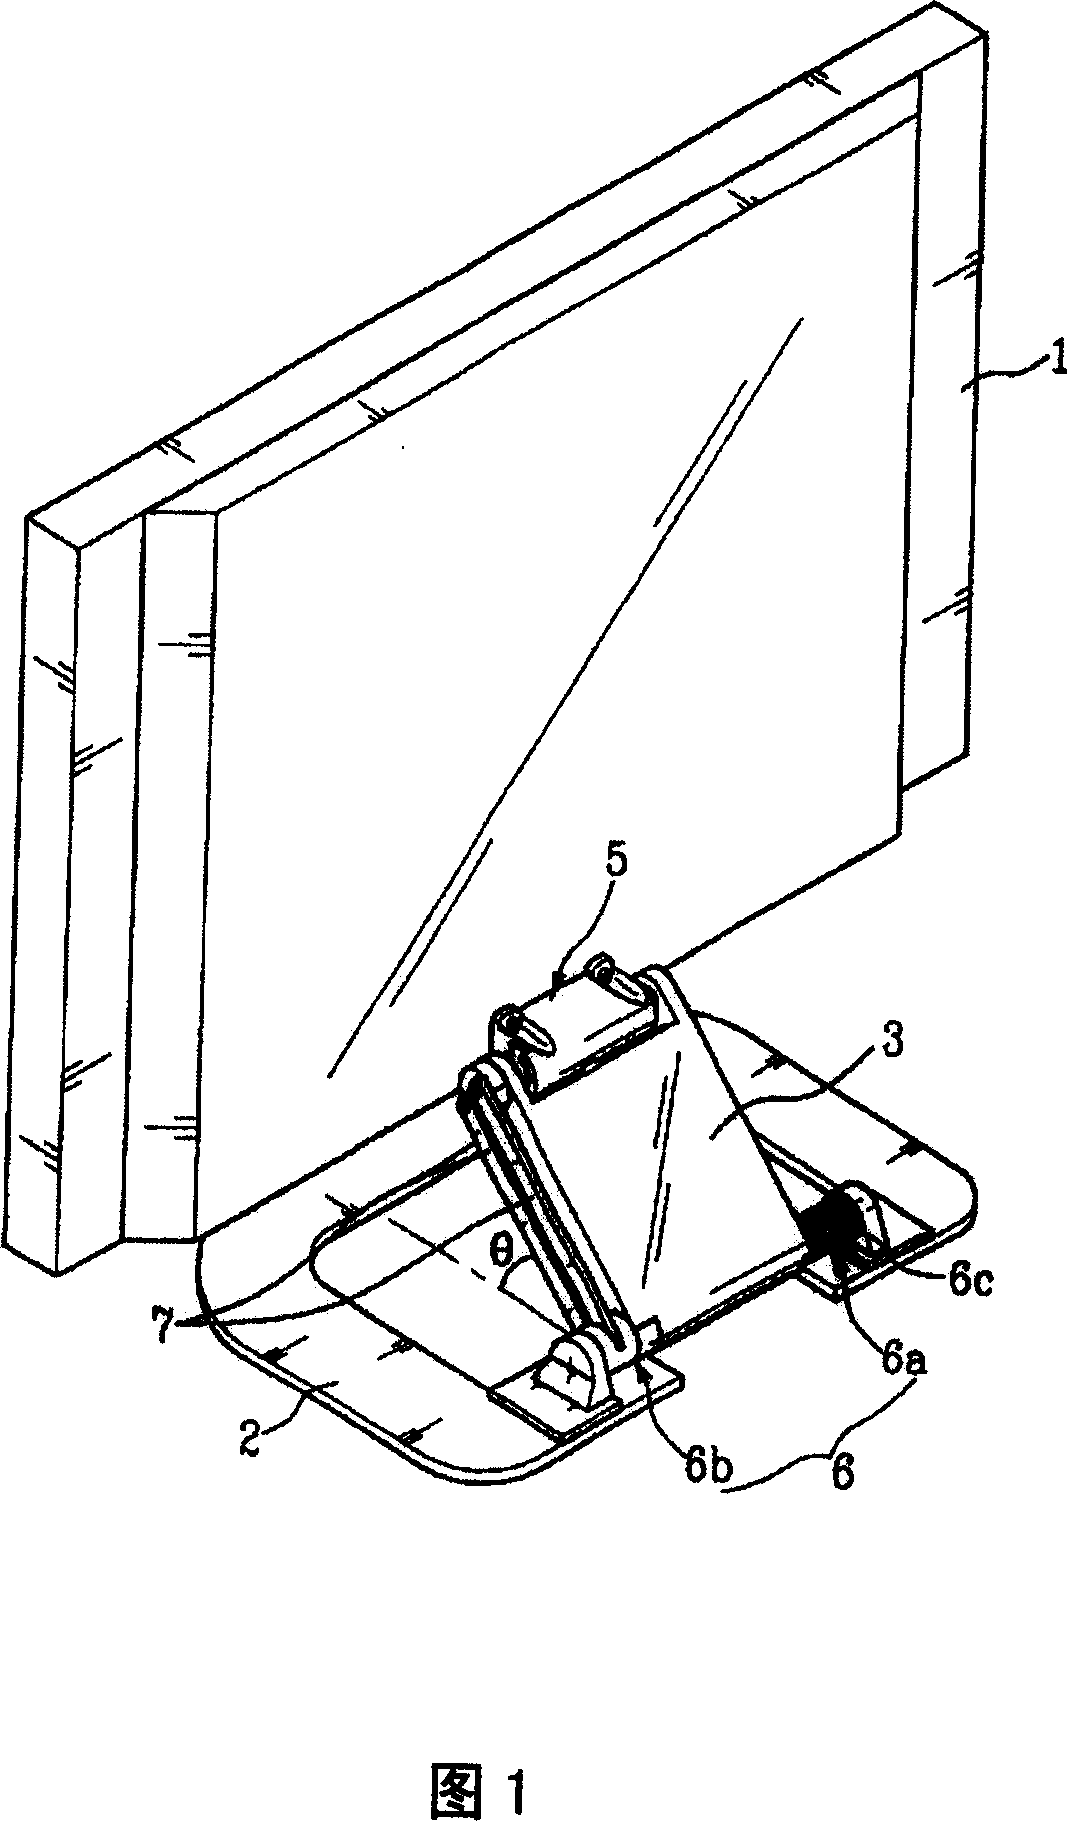 Display hinge device